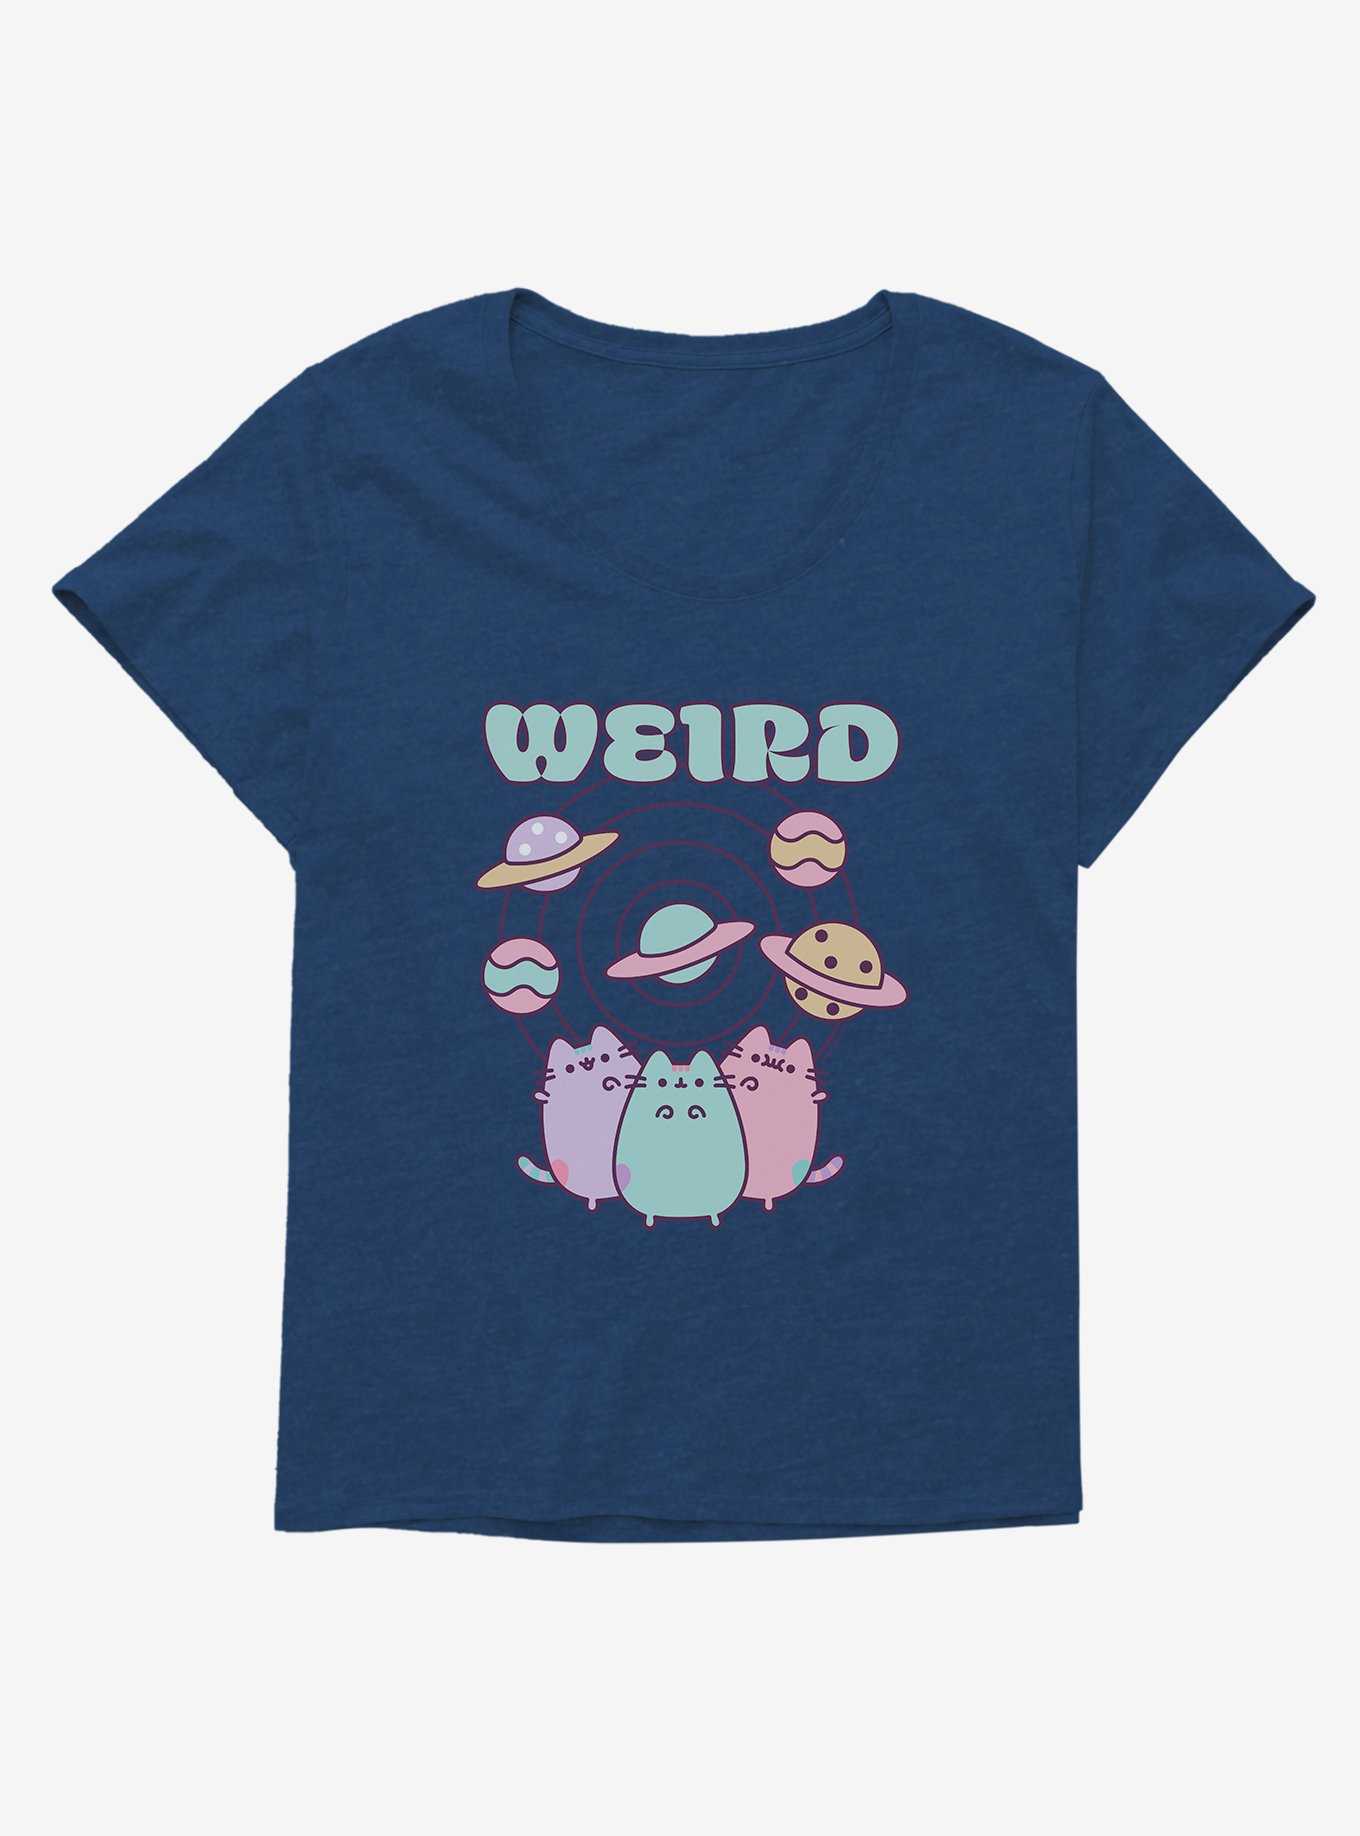 Pusheen Weird Girls T-Shirt Plus Size, , hi-res